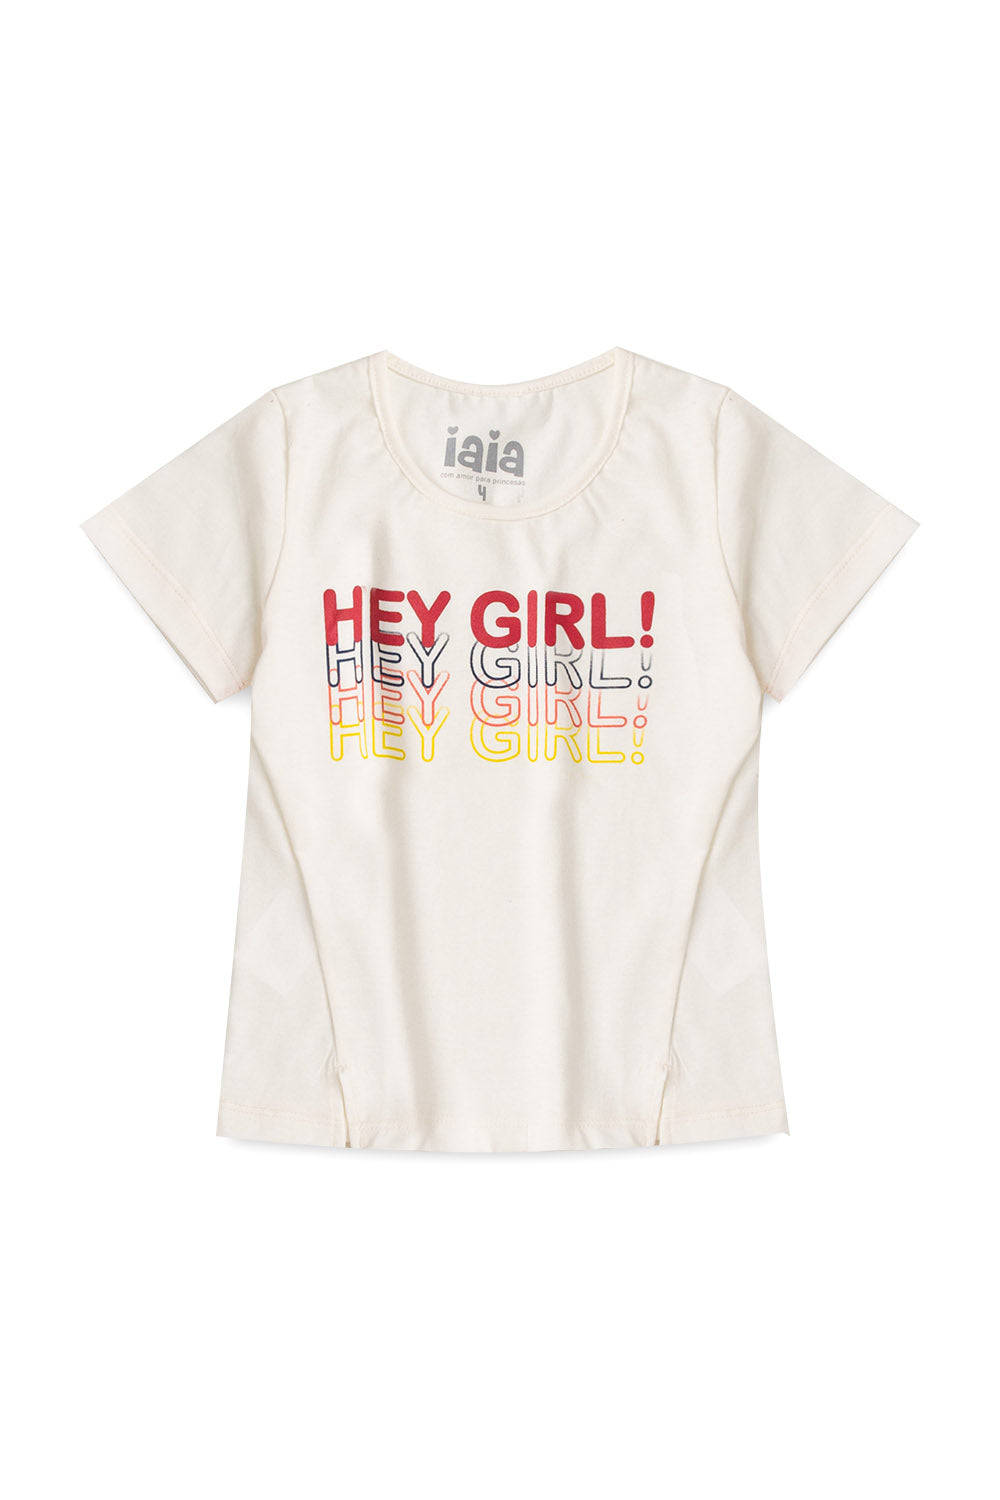 HEY GIRLS Girl T-Shirts + Shorts Set